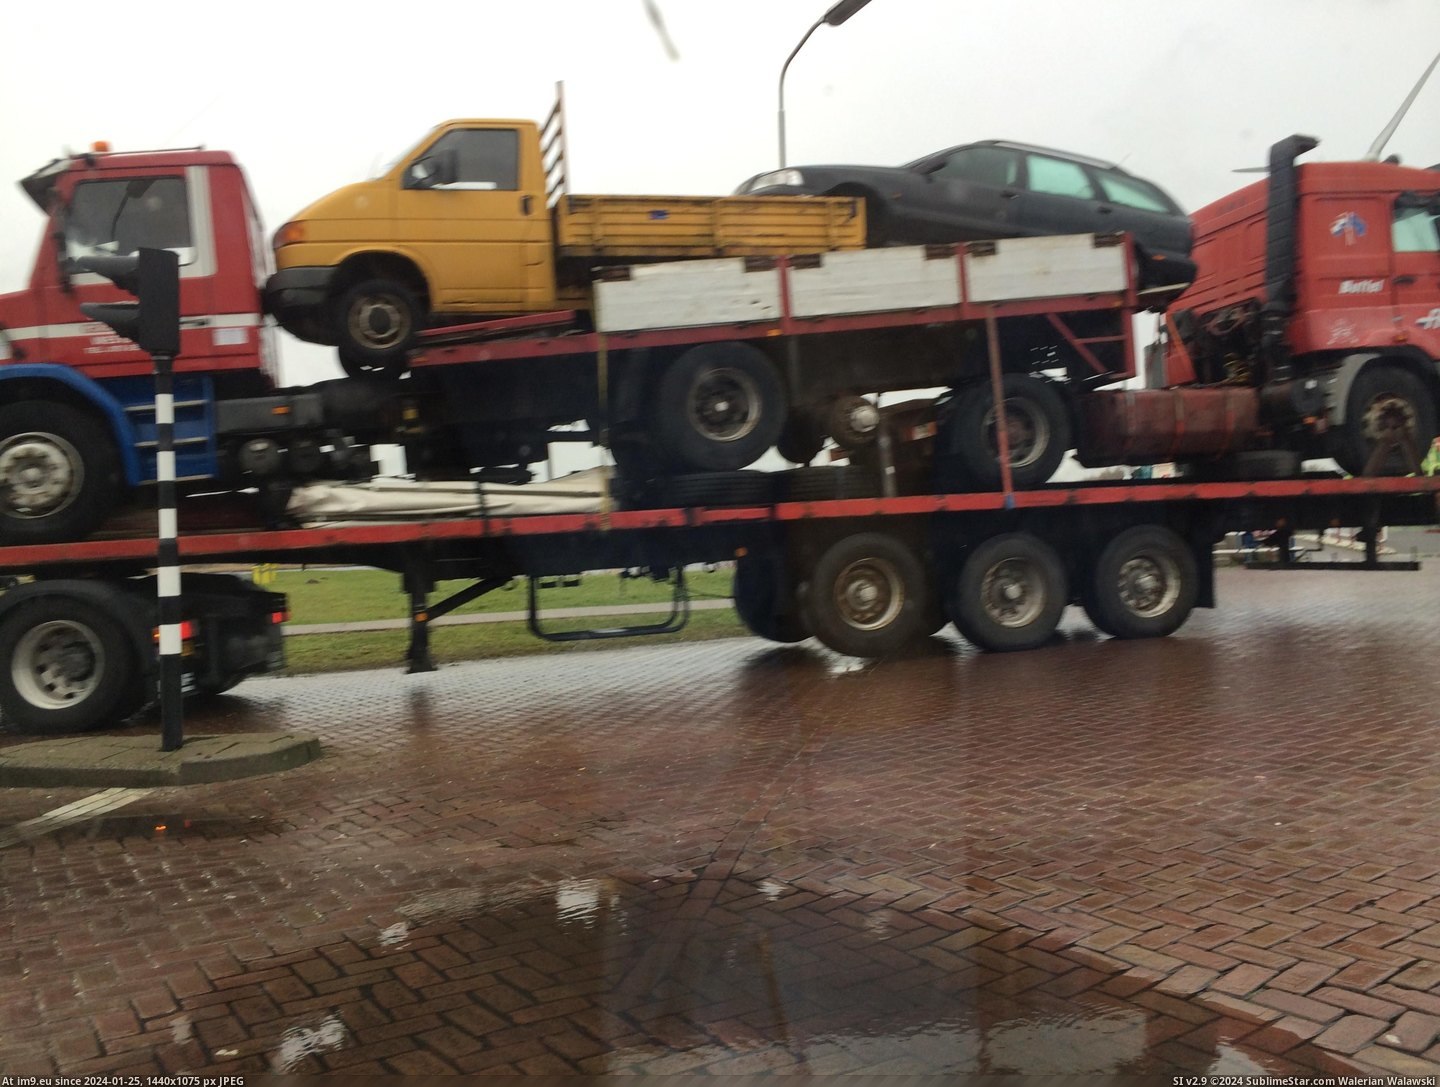 #Car  #Truck [Mildlyinteresting] Car upon a truck upon a truck upon a truck upon a truck. 1 Pic. (Bild von album My r/MILDLYINTERESTING favs))